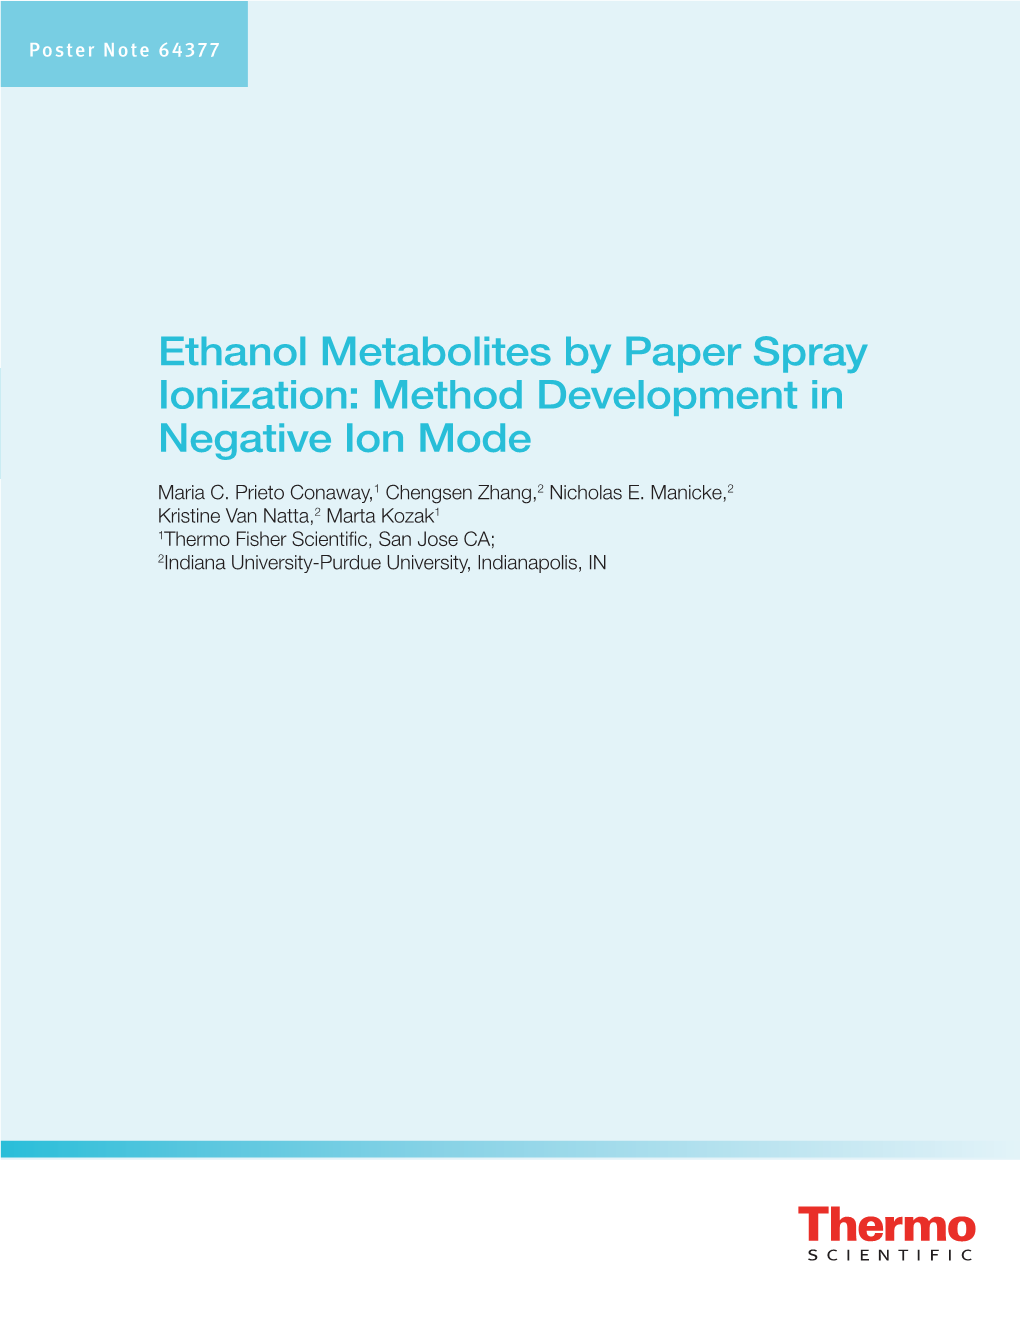 Ethanol Metabolites by Paper Spray Ionization: Method Development in Negative Ion Mode